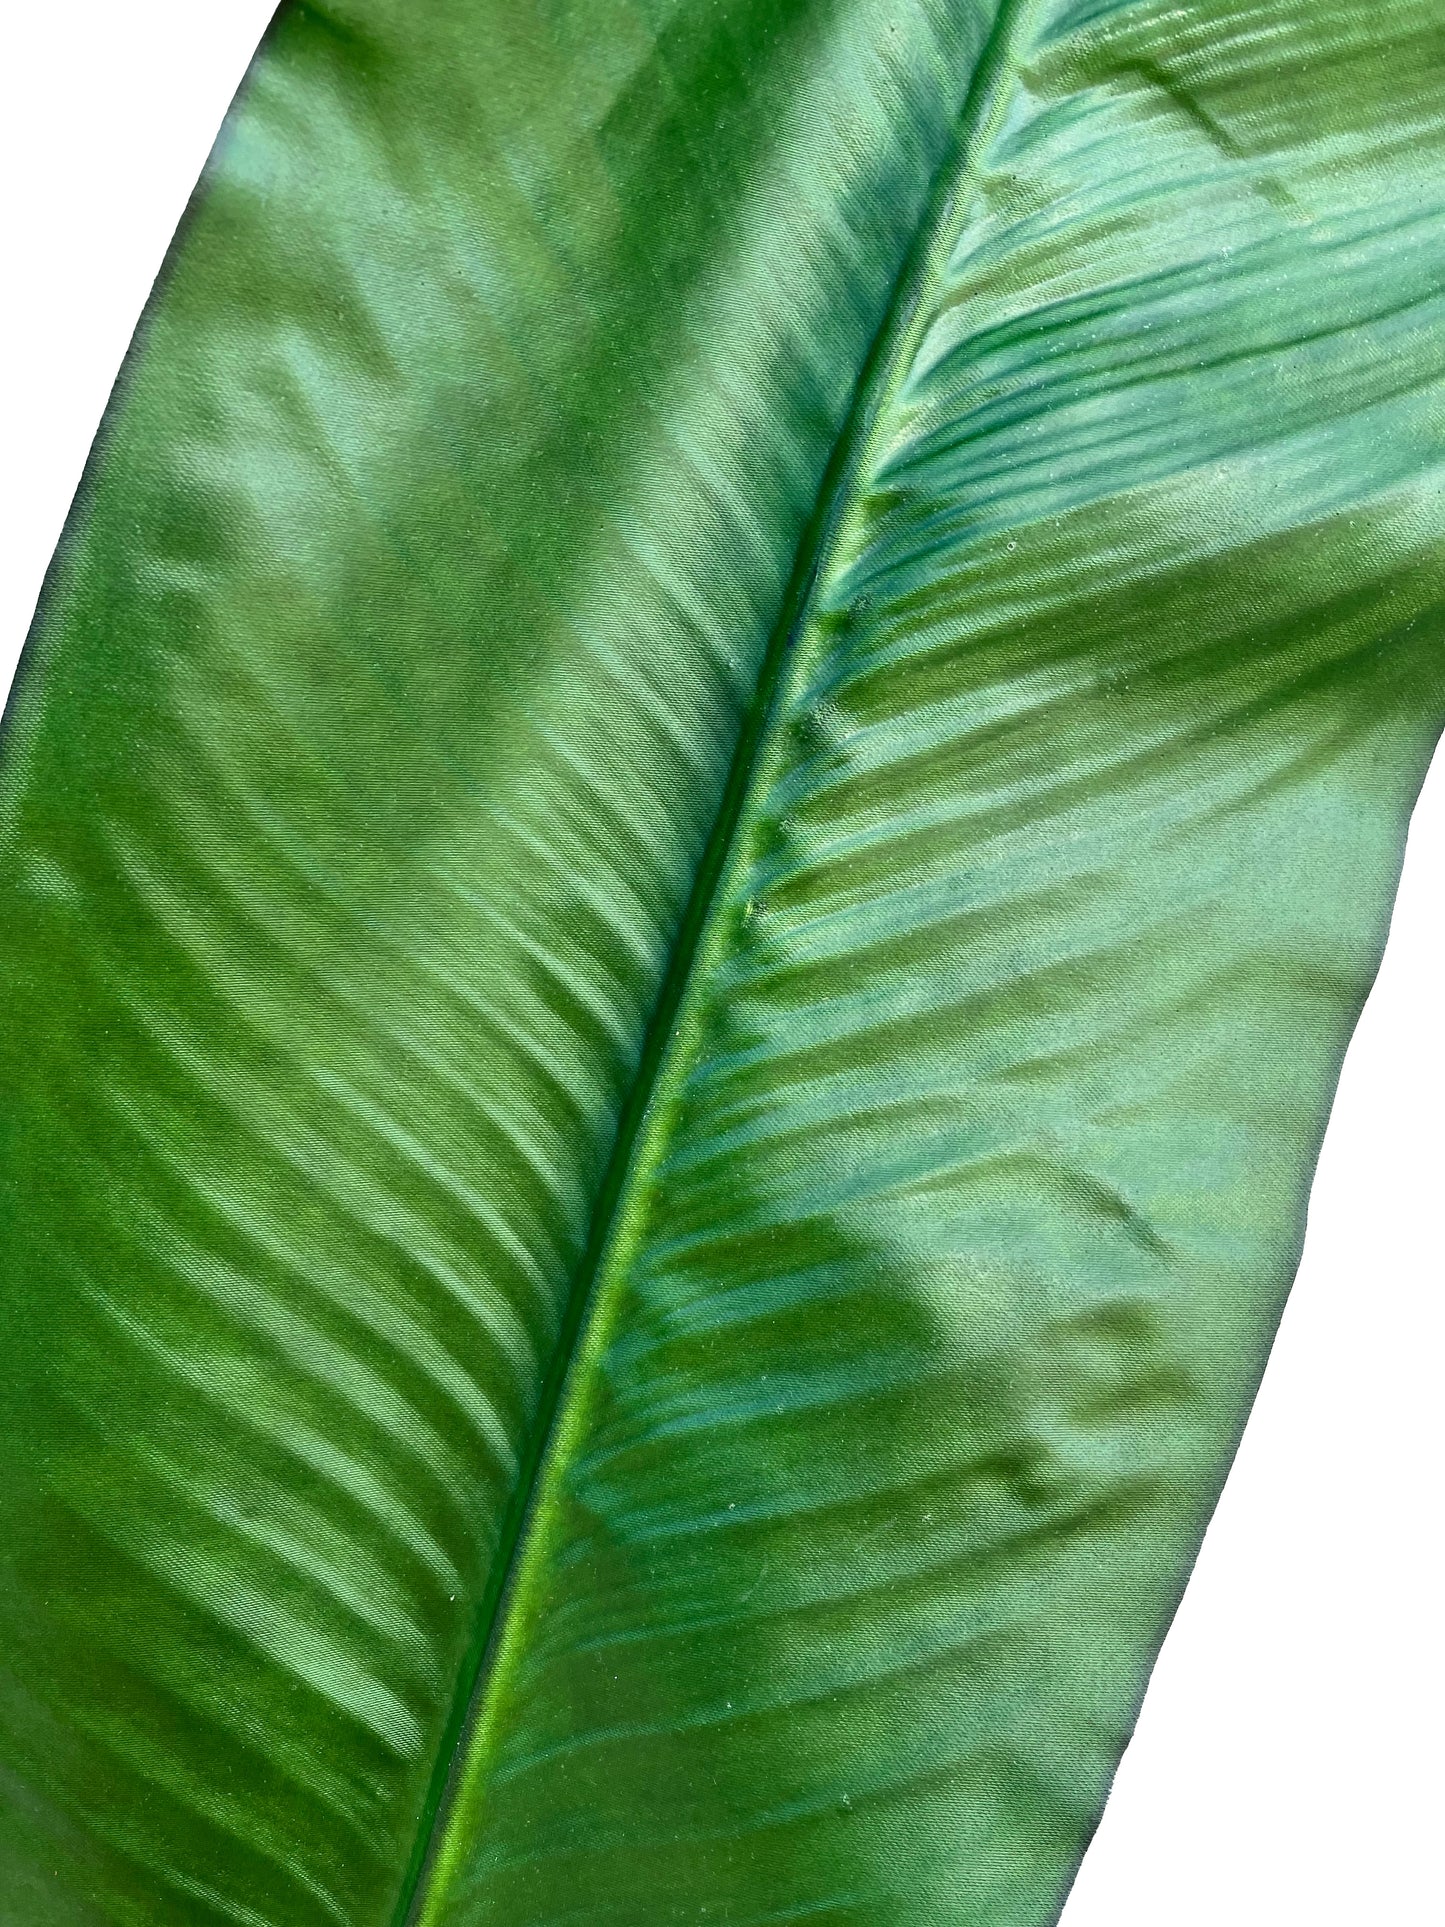 Artificial Banana Leaf